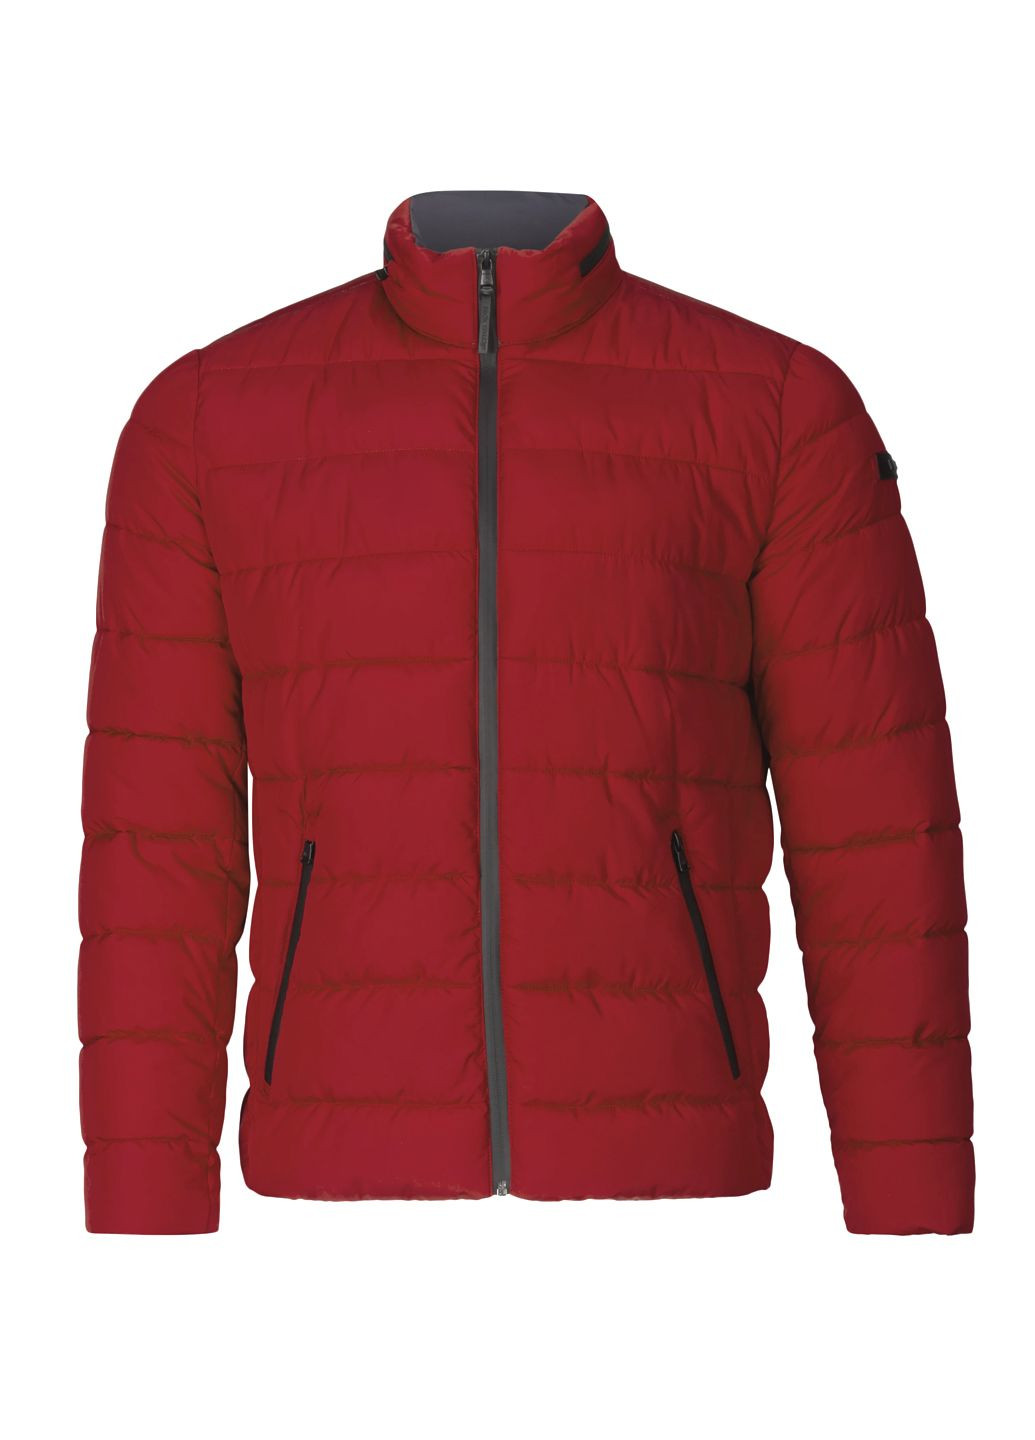 Красная демисезонная куртка демисезонная - мужская куртка mk0536m Michael Kors